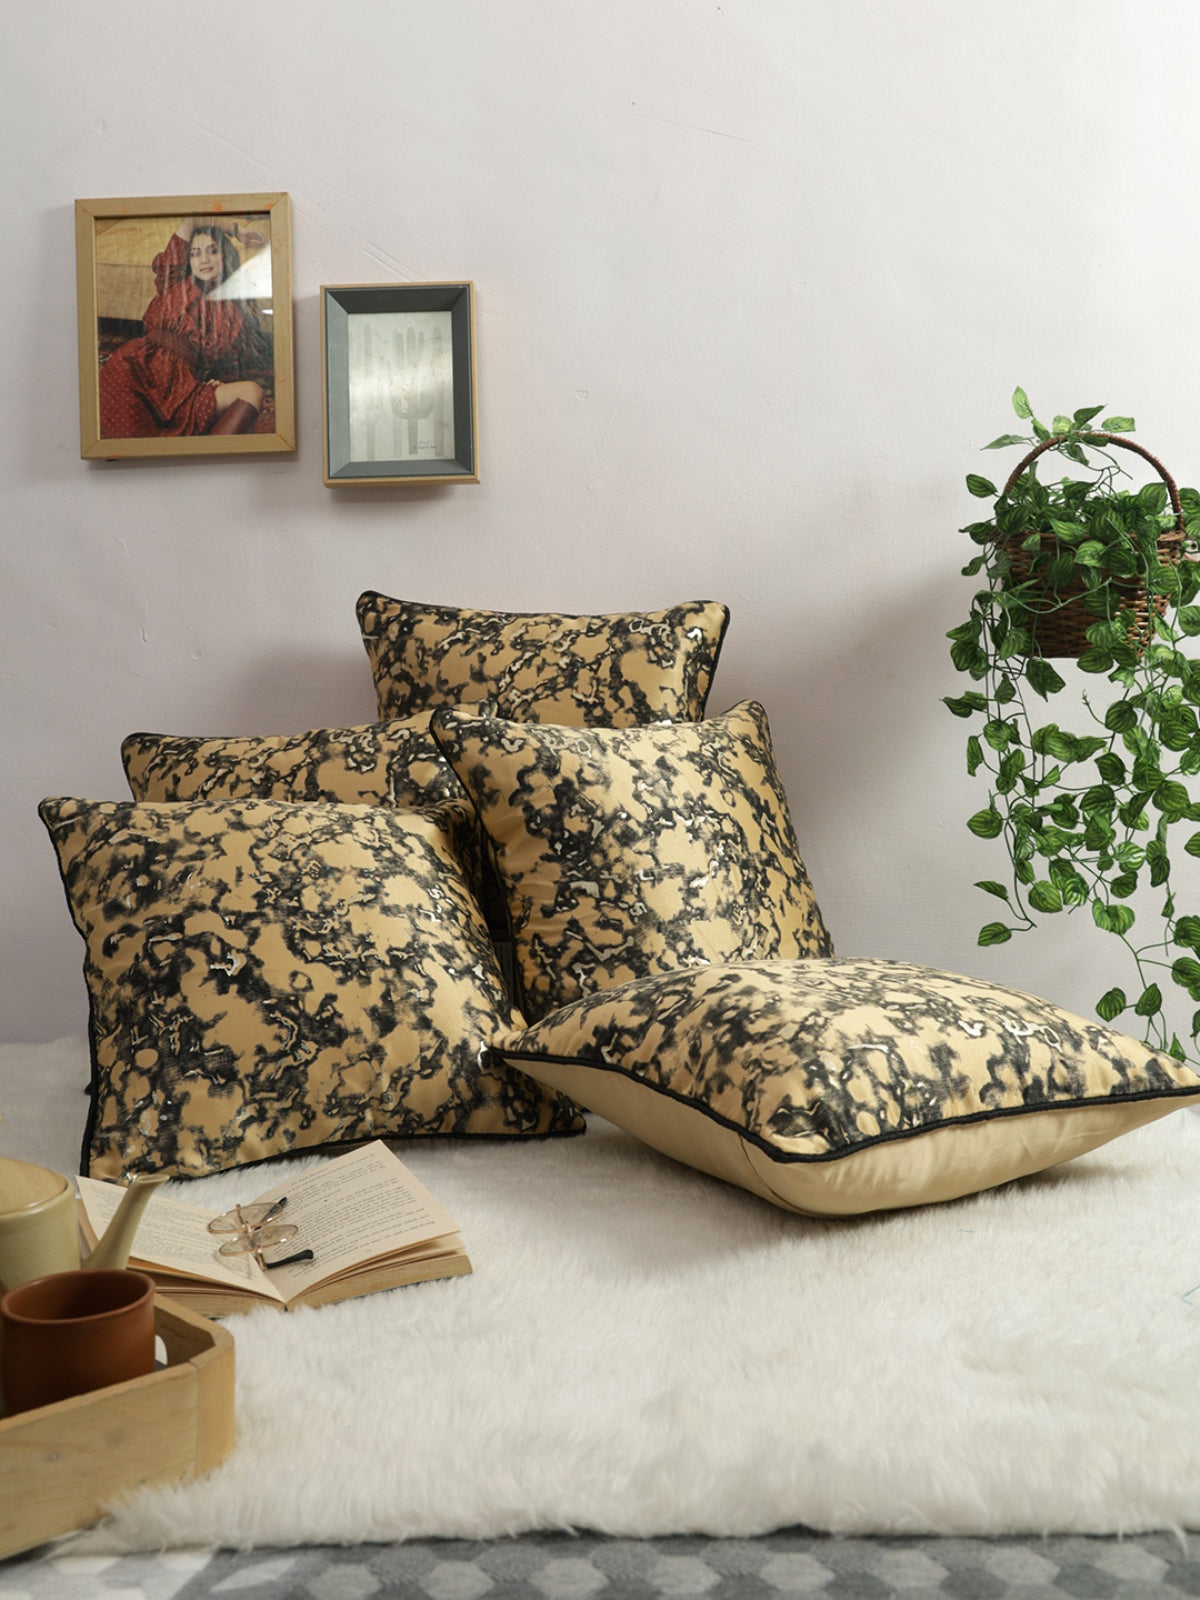 ROMEE Beige Texture Printed Cushion Covers Set of 5